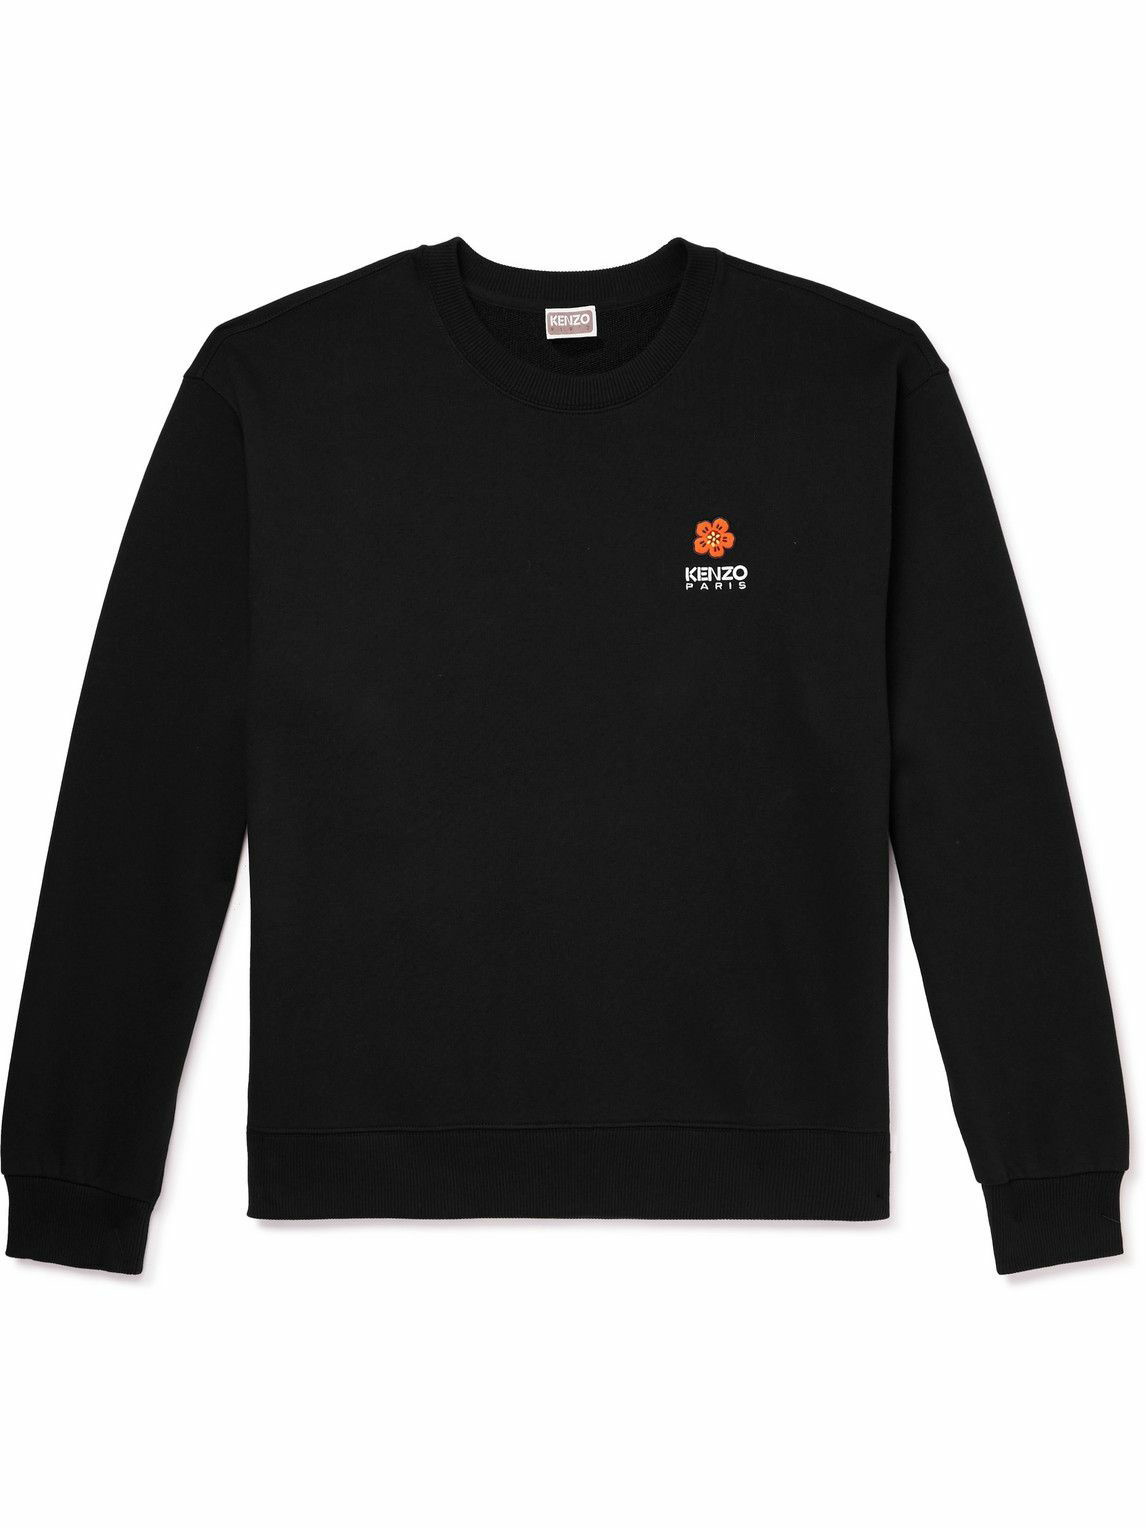 KENZO - Logo-Appliquéd Embroidered Cotton-Jersey Sweatshirt - Black Kenzo